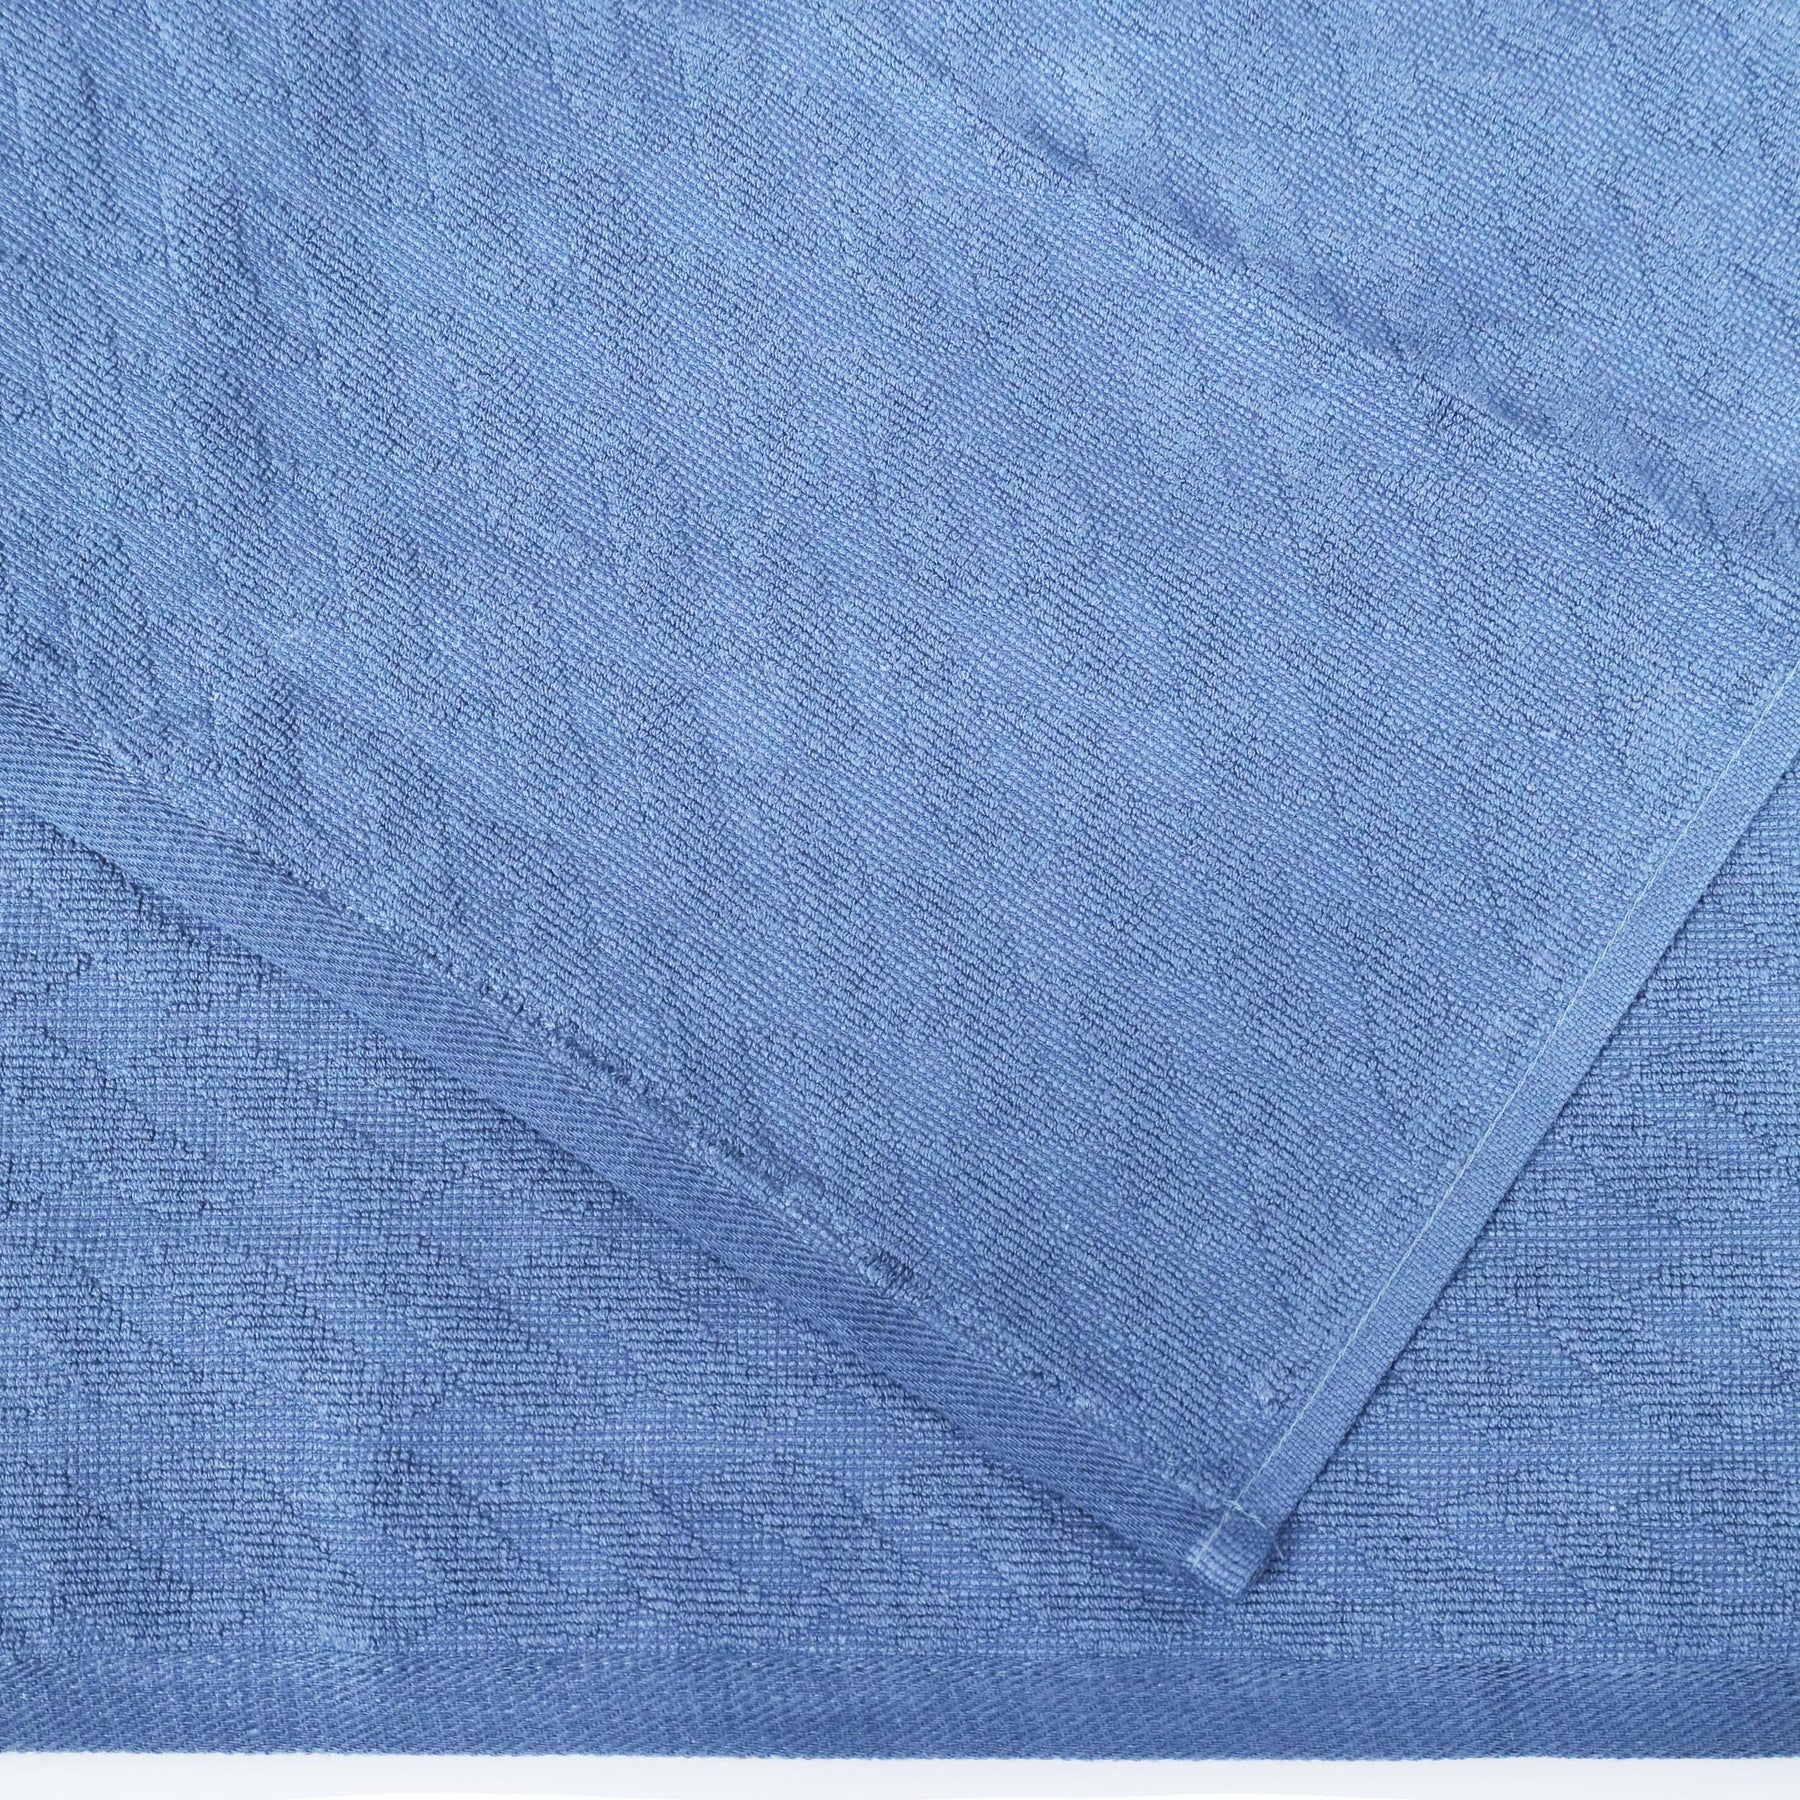 Premium Turkish Cotton Herringbone Jacquard Assorted 6-Piece Towel Set - Pacific Blue